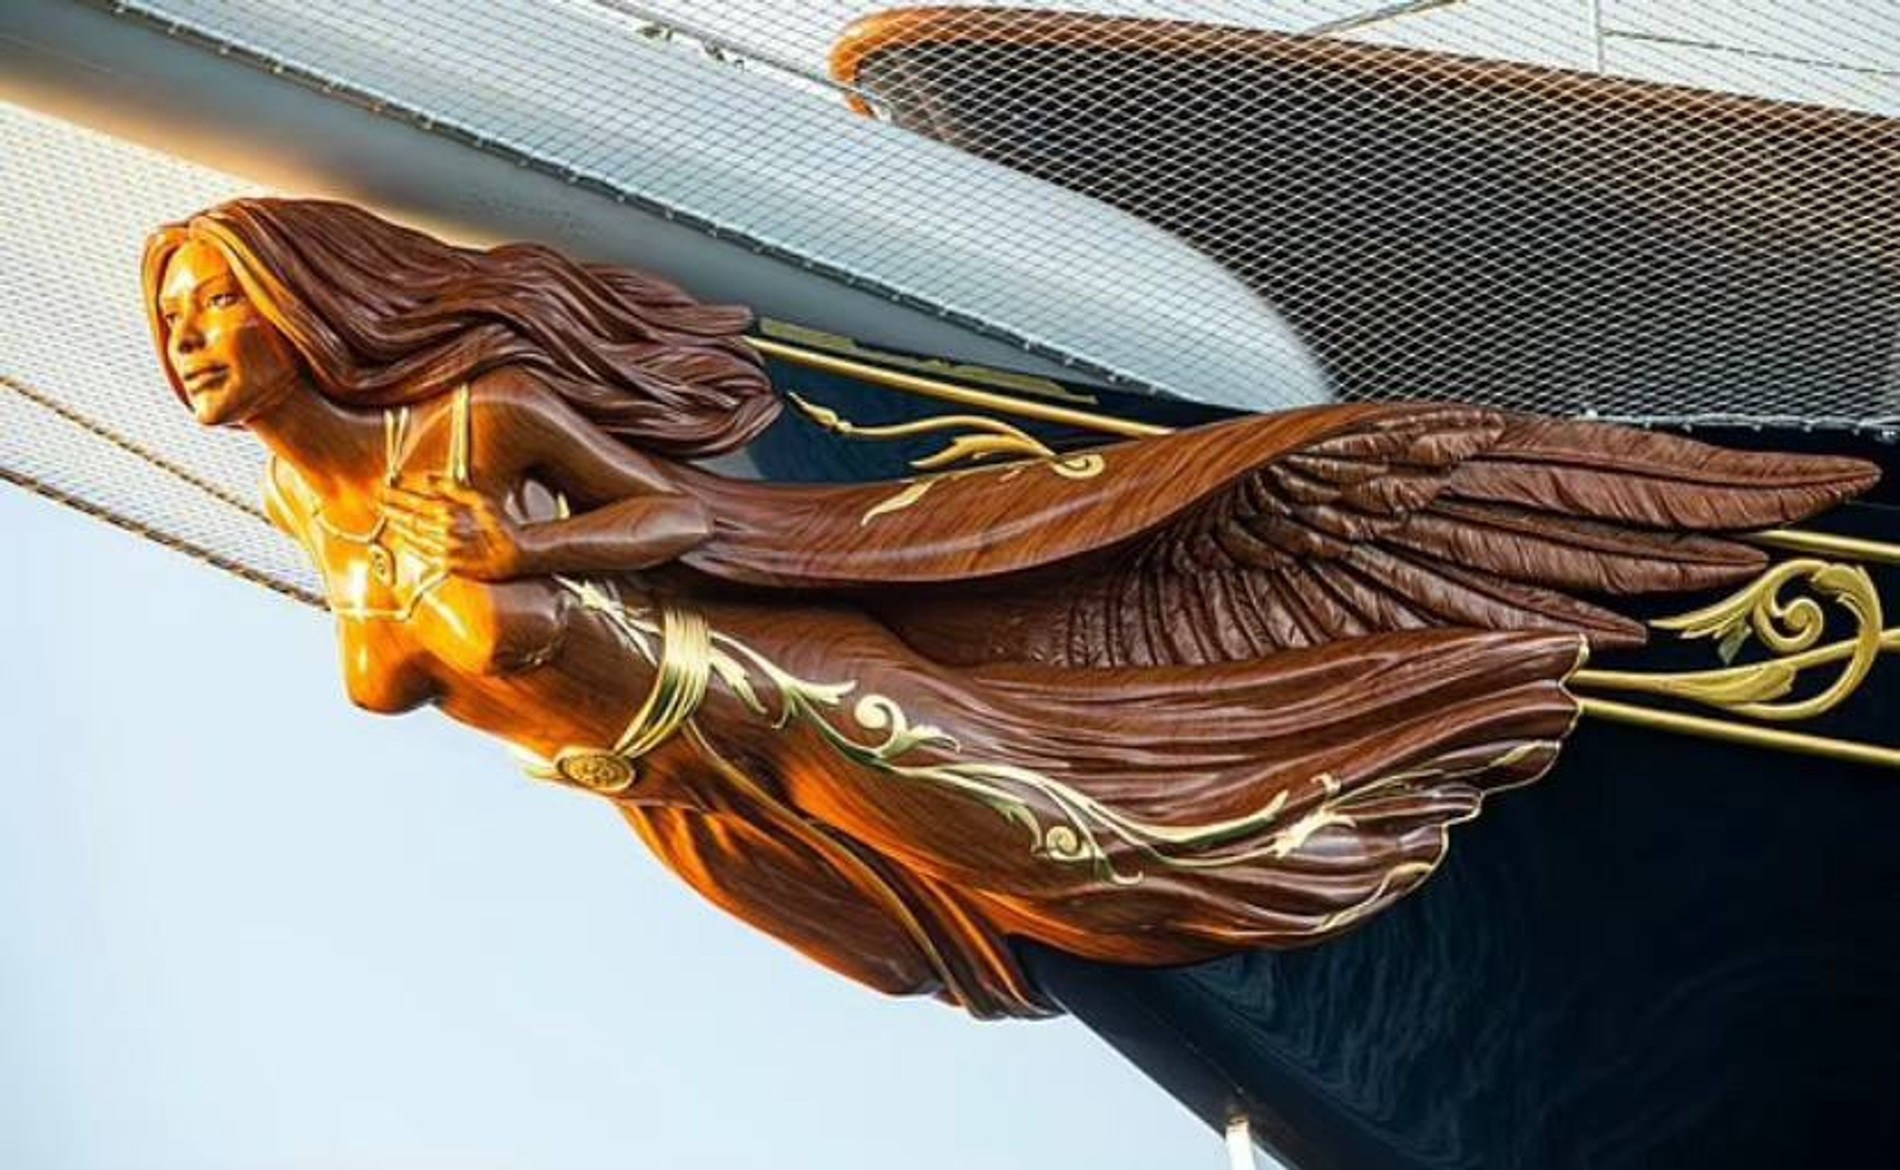 Деревянная фигура на носу яхты Безоса
Фото: Daily Mail